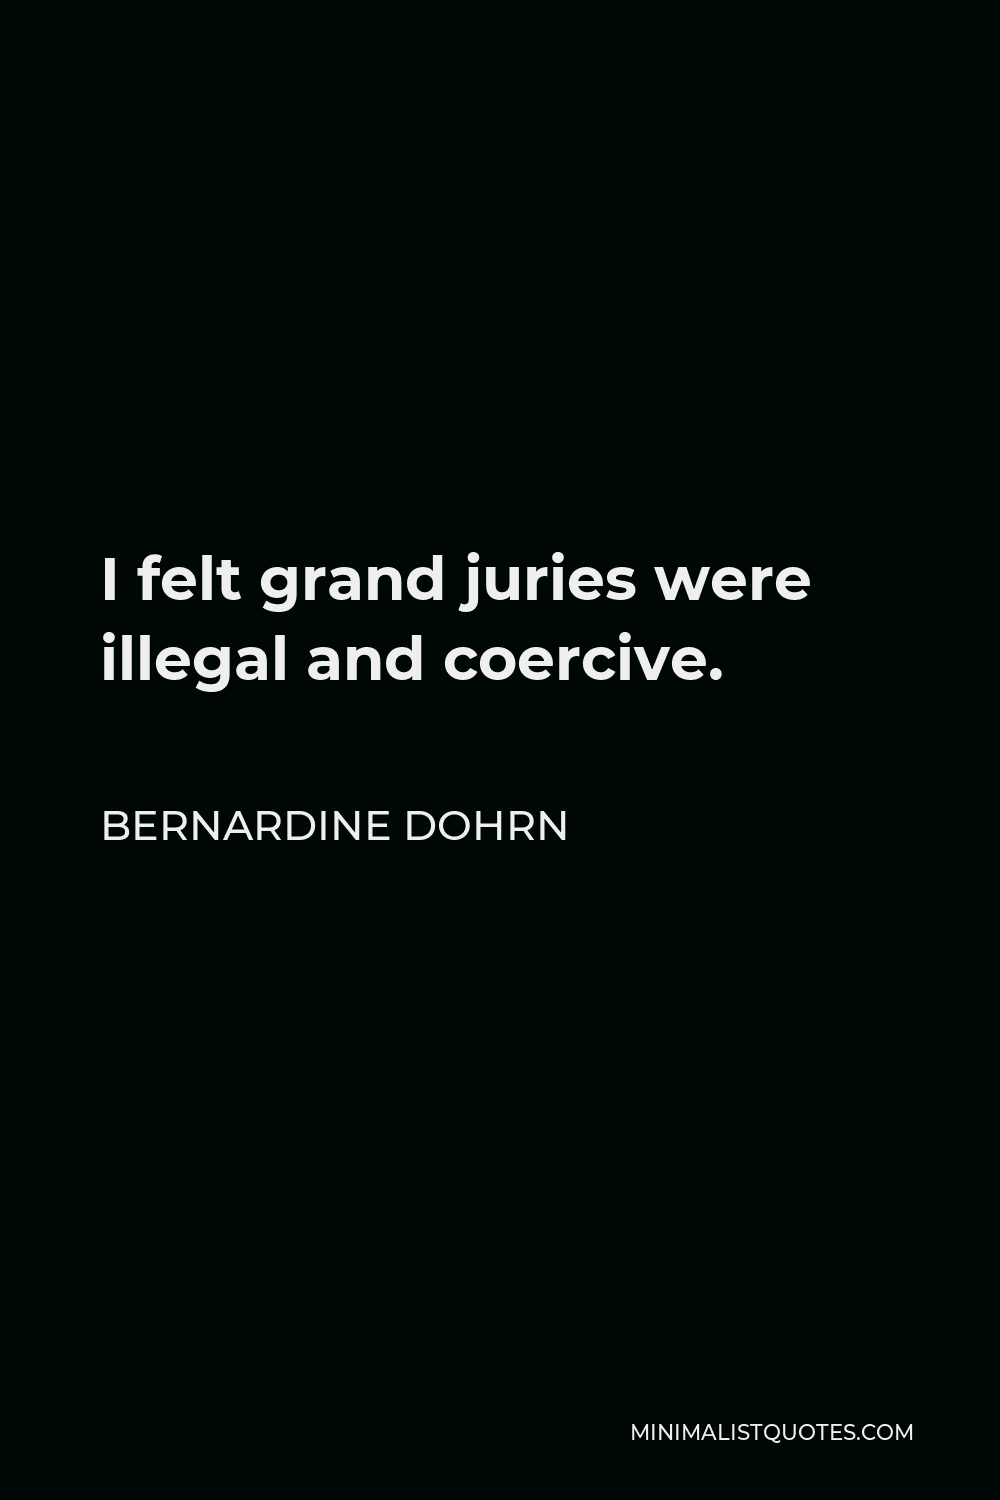 Bernardine Dohrn Quote - I felt grand juries were illegal and coercive.